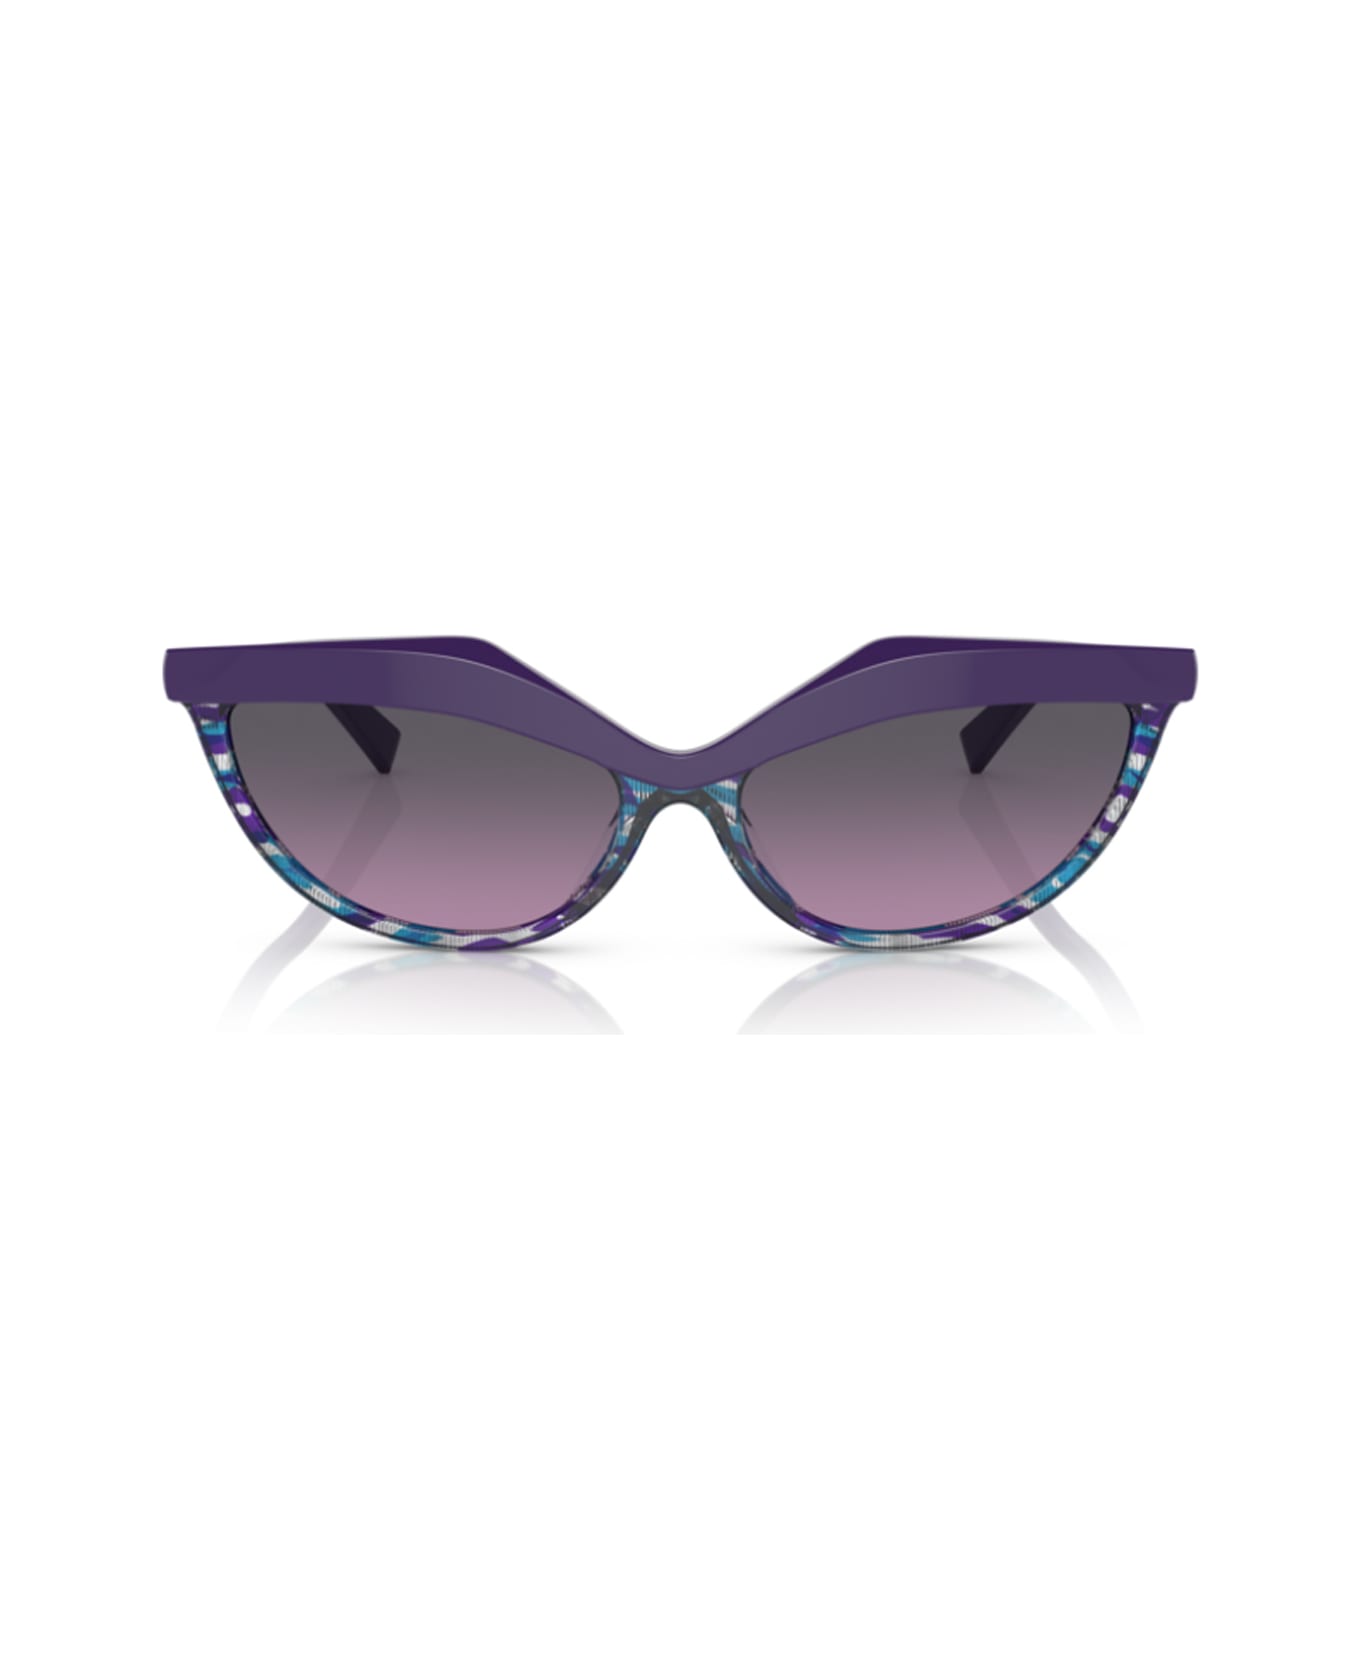 Alain Mikli A05070 Sunglasses - Viola